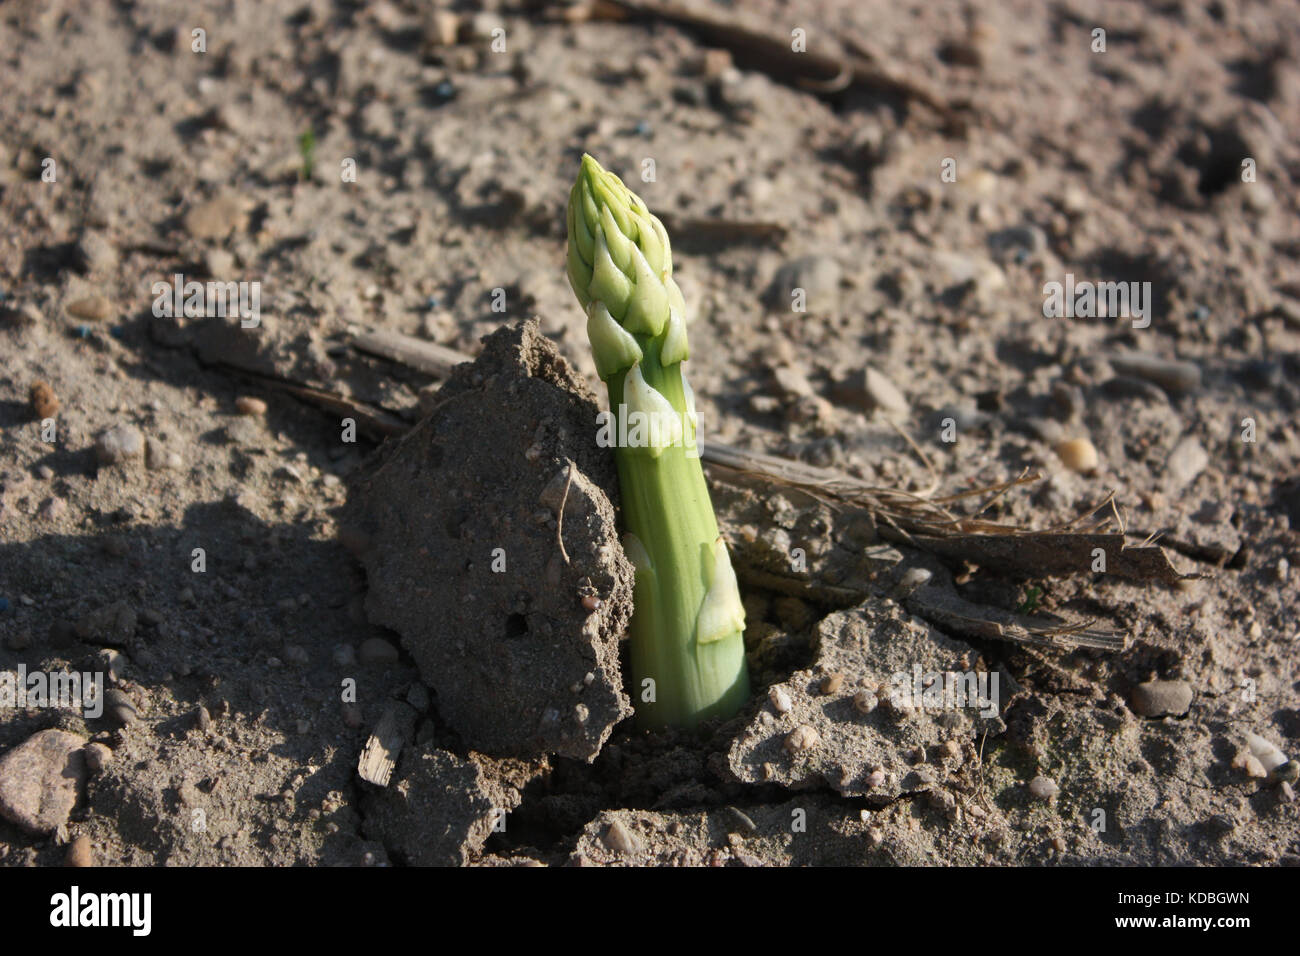 Ackerbau von Spargel in Deutschland - Arable farming of asparagus in Germany Stock Photo